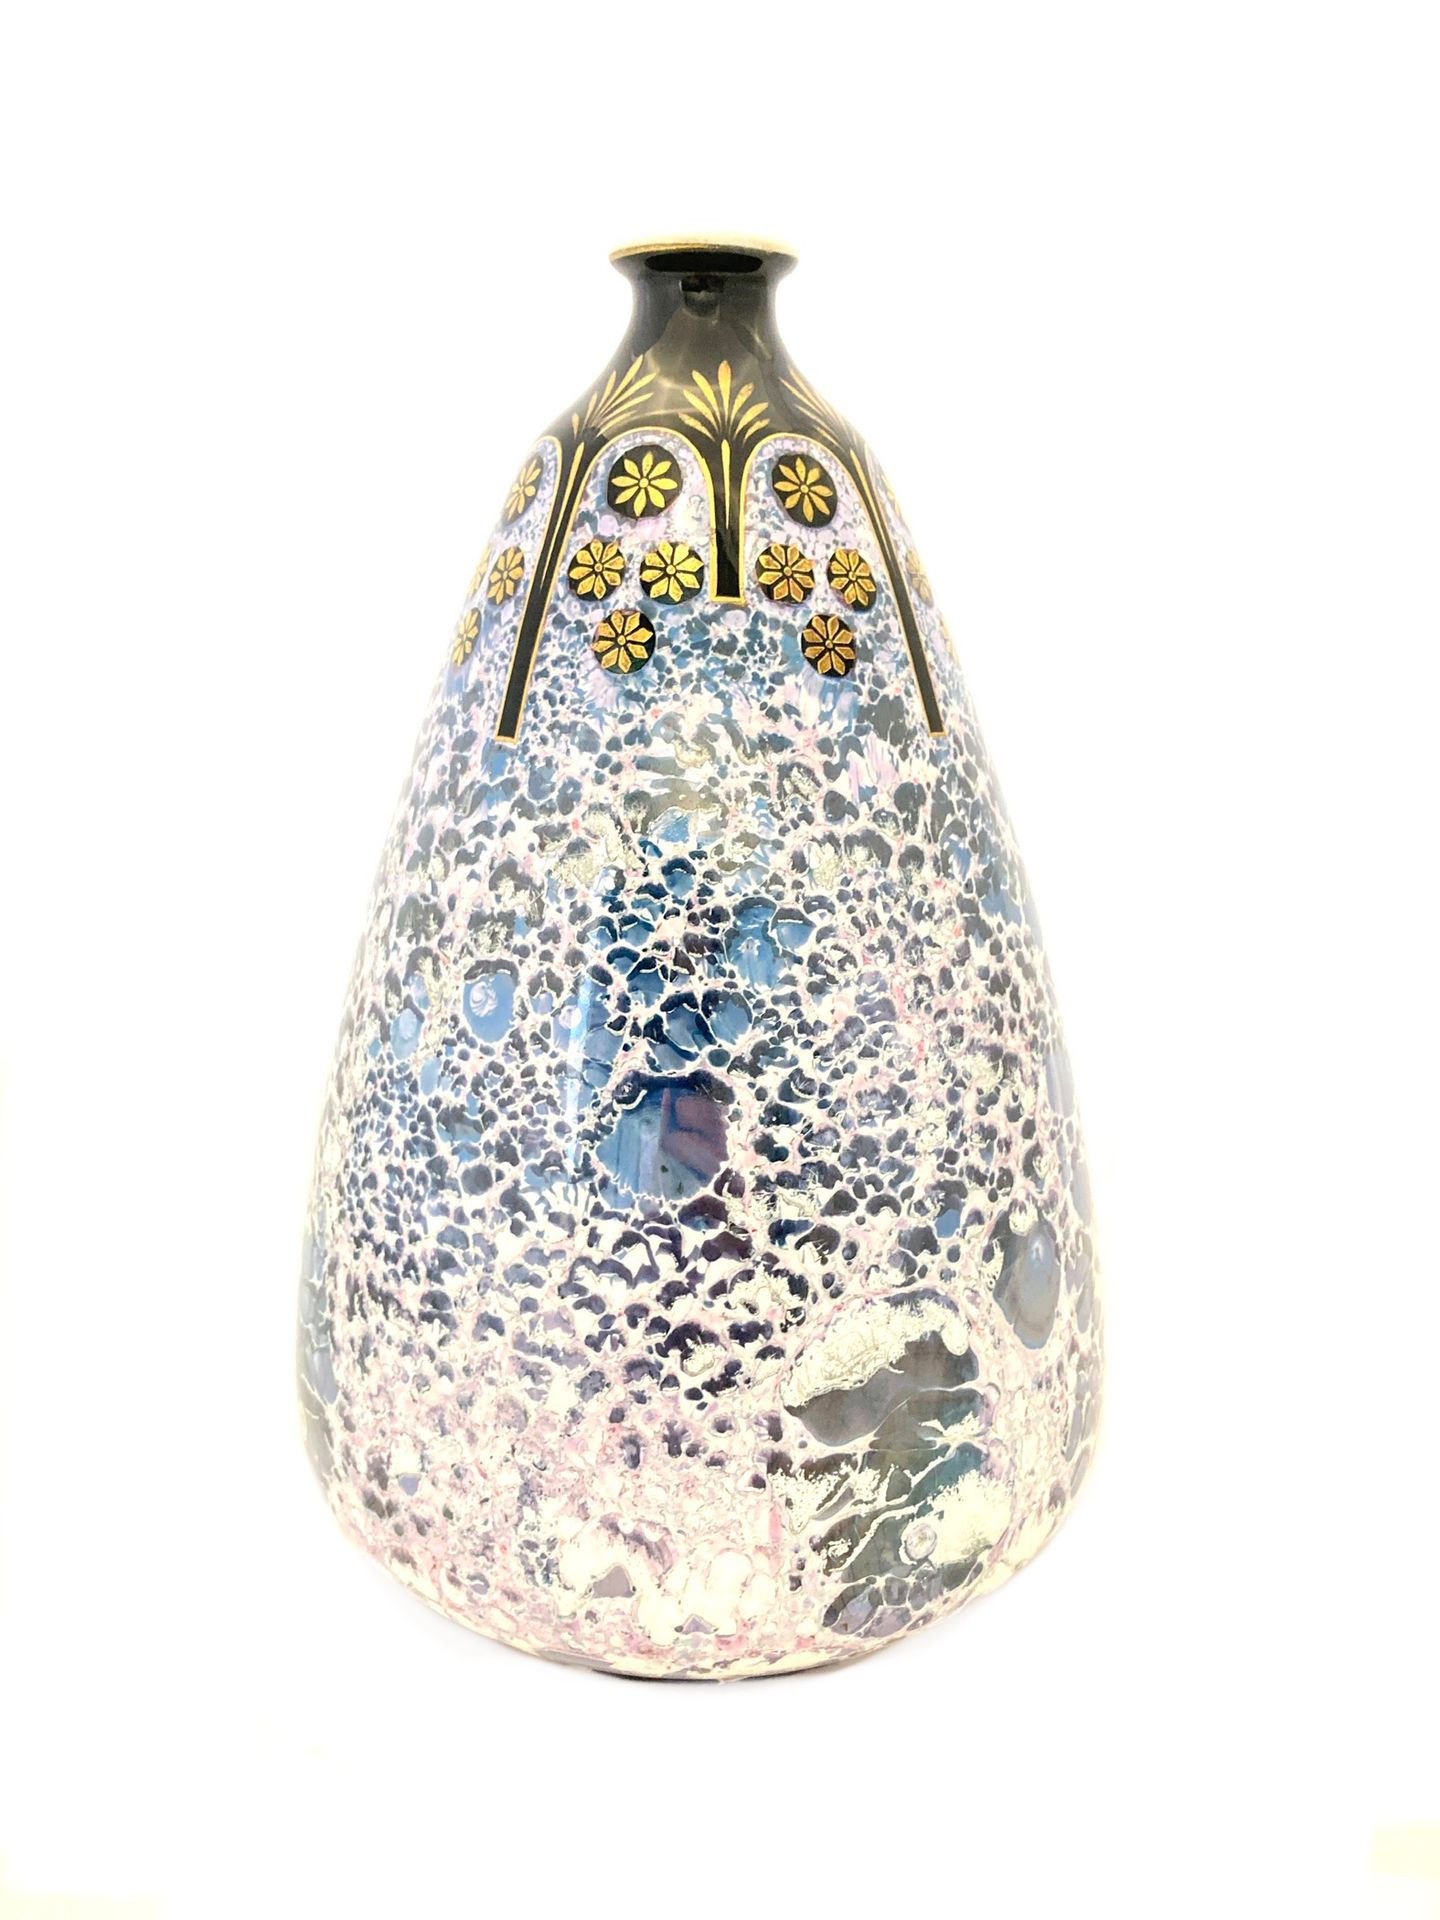 Null MOULIN DES LOUPS HAMAGE，卵圆形陶瓶，有装饰艺术风格的大理石封面装饰，颈部有金色的花和叶的过度装饰。高29.5厘米。